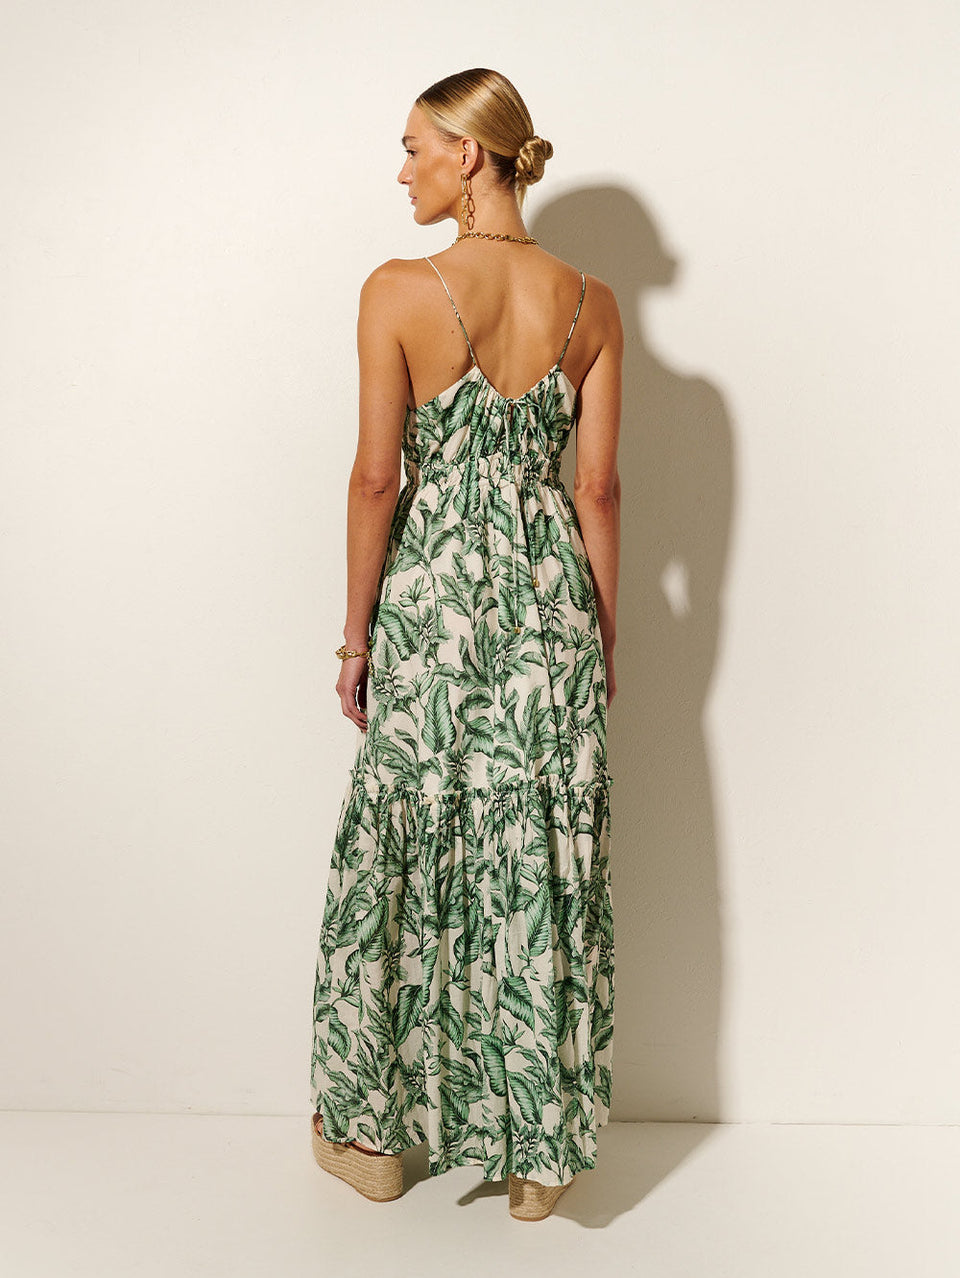 Tropico Maxi Dress KIVARI | Model wears palm leaf printed maxi dress back view